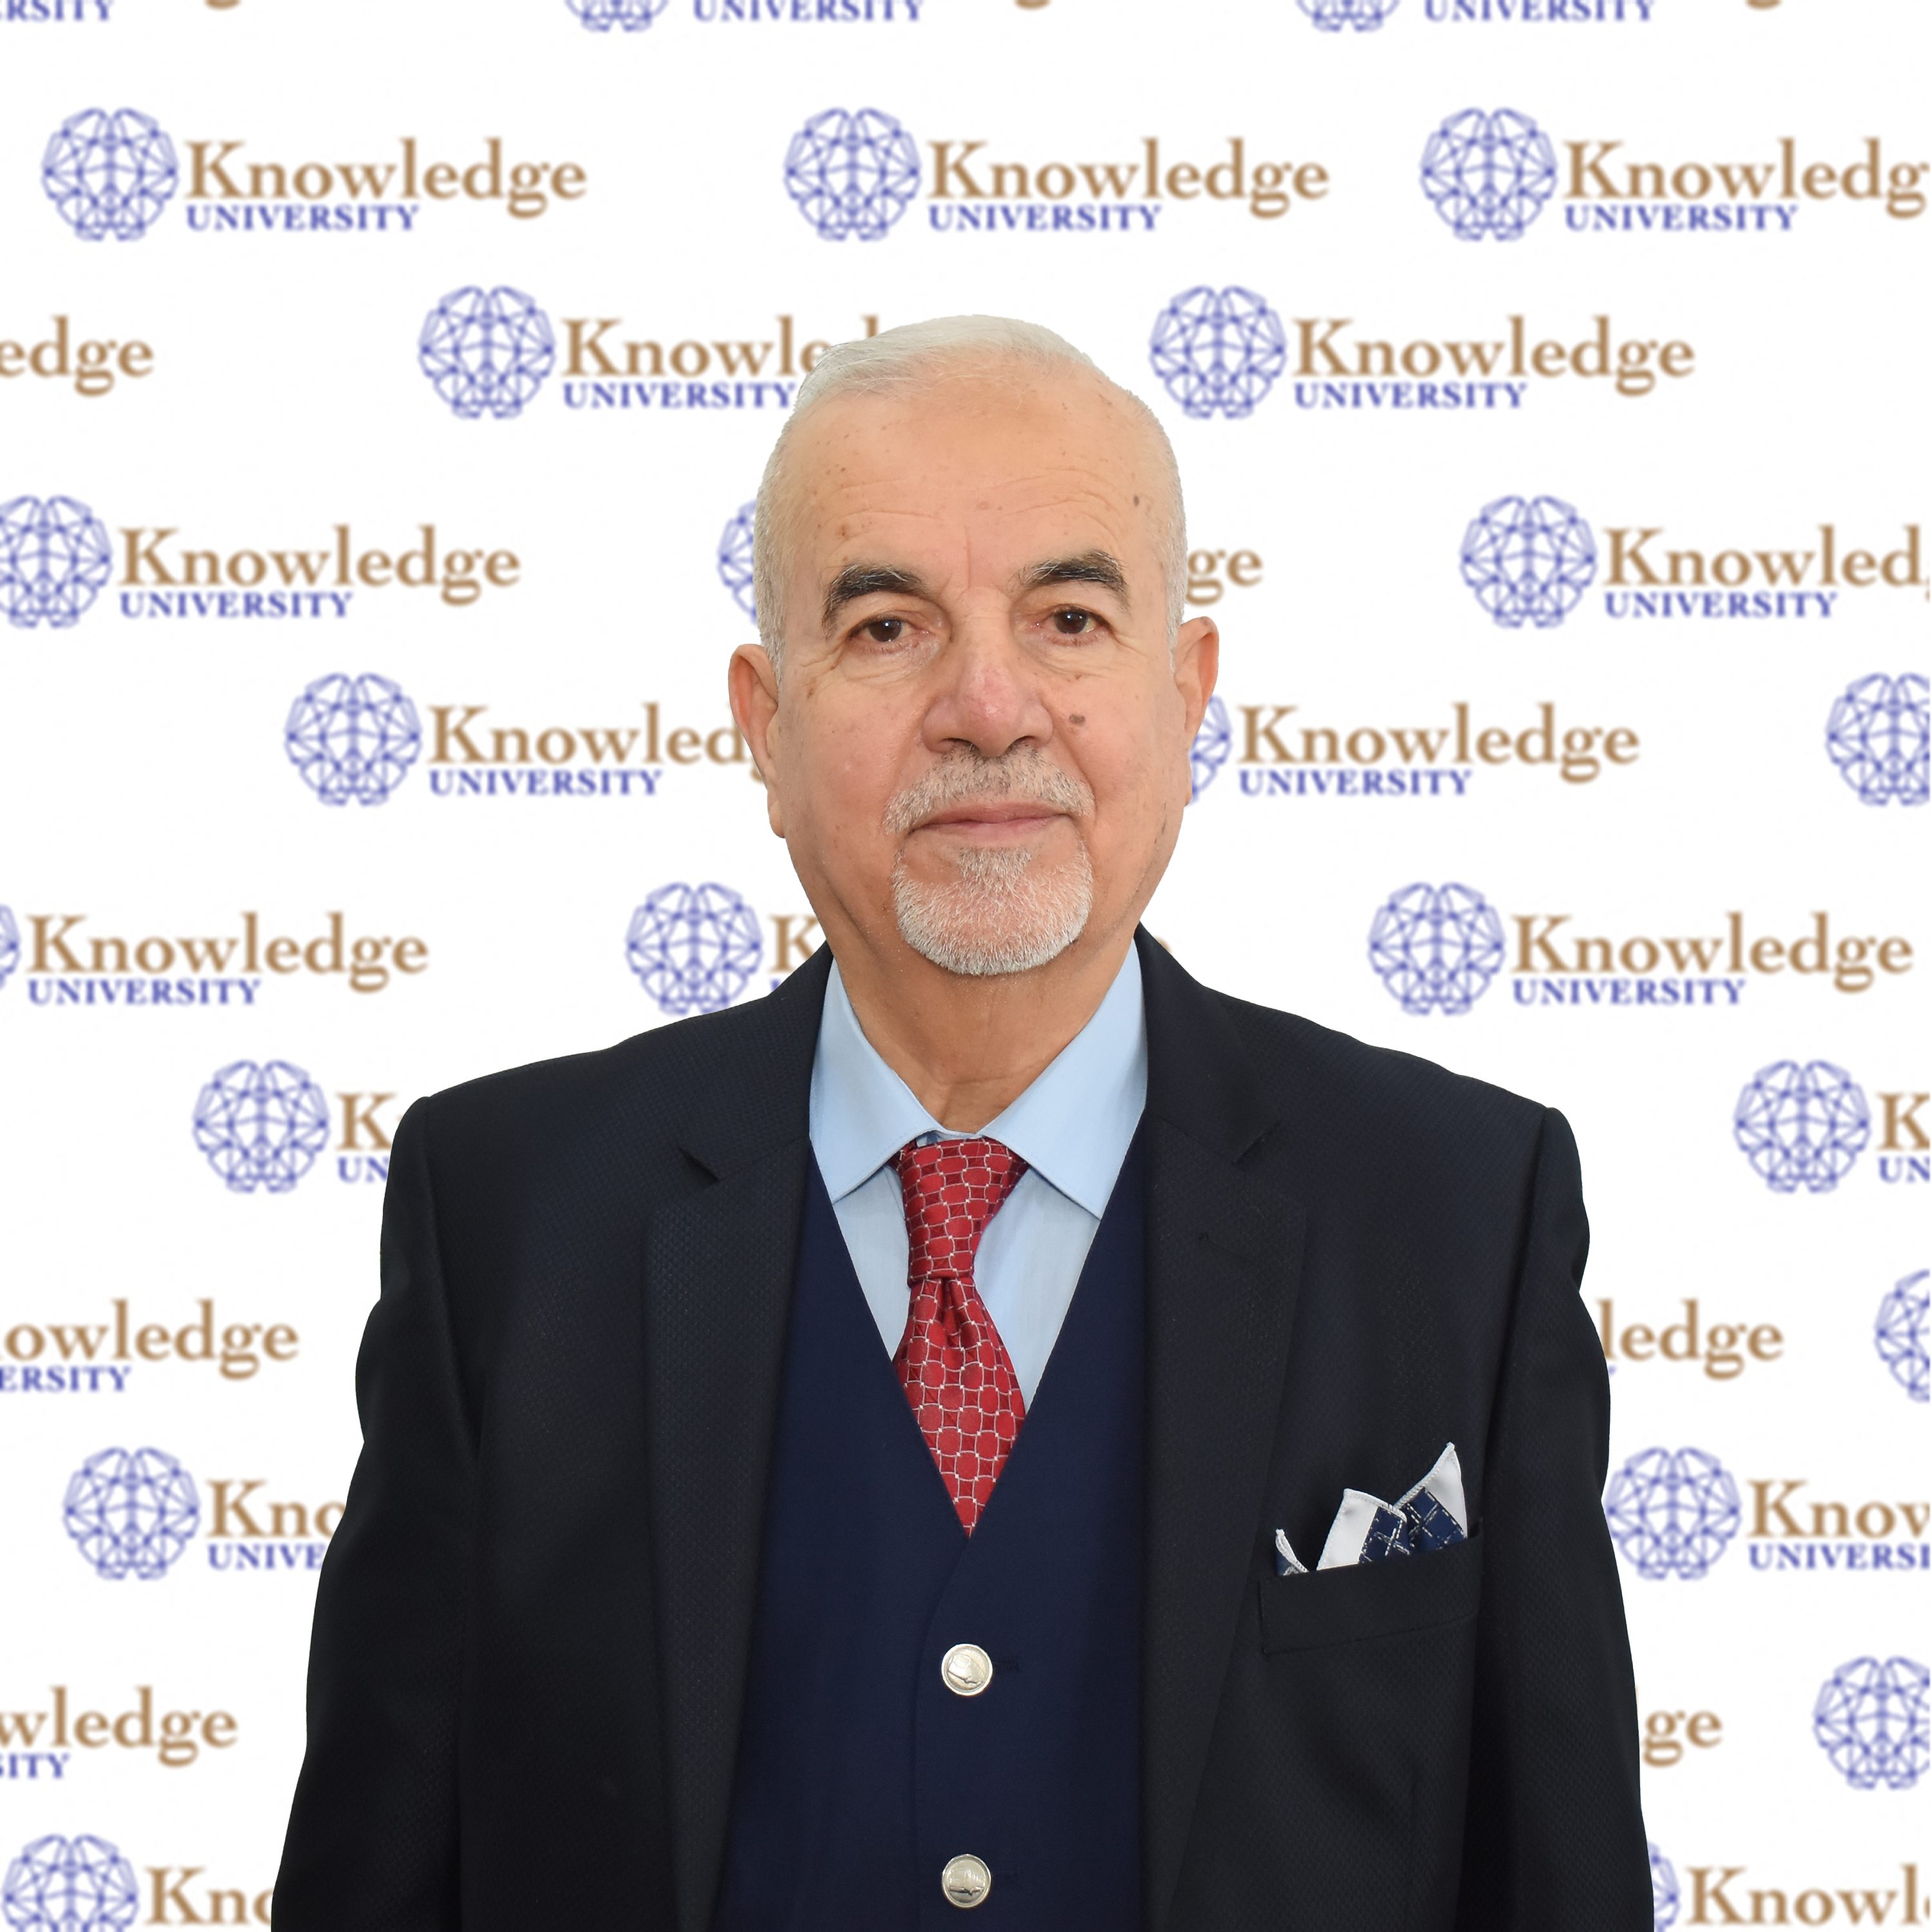 Mohanad Ahmed Ali, Staff at Knowledge